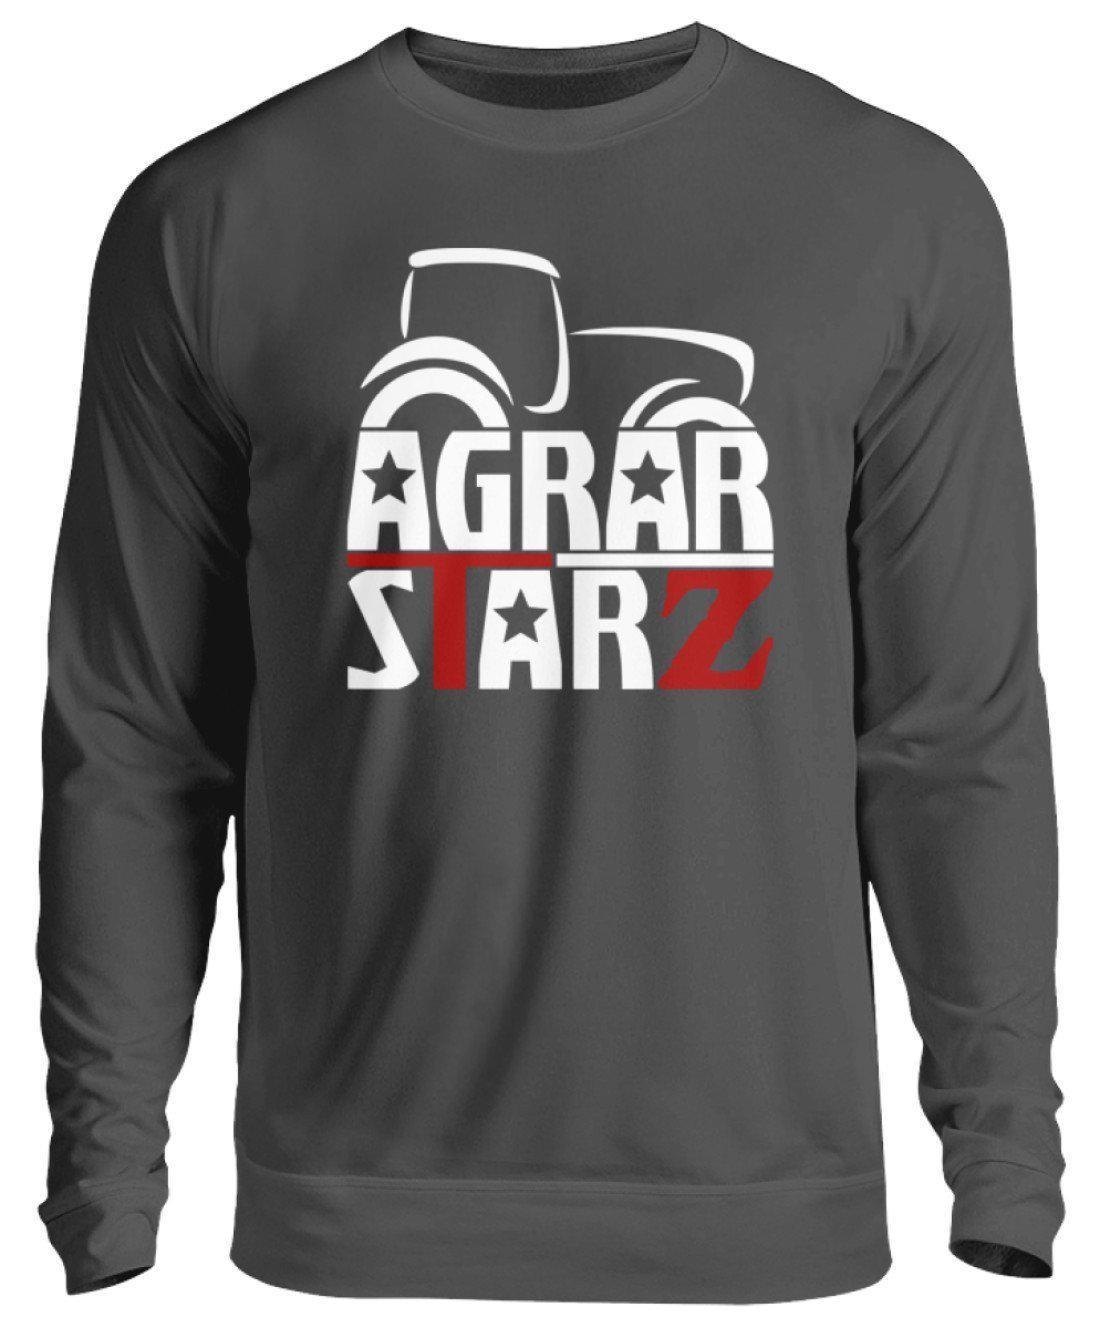 Agrarstarz · Unisex Sweatshirt Pullover-Unisex Sweatshirt-Storm Grey (Solid)-S-Agrarstarz